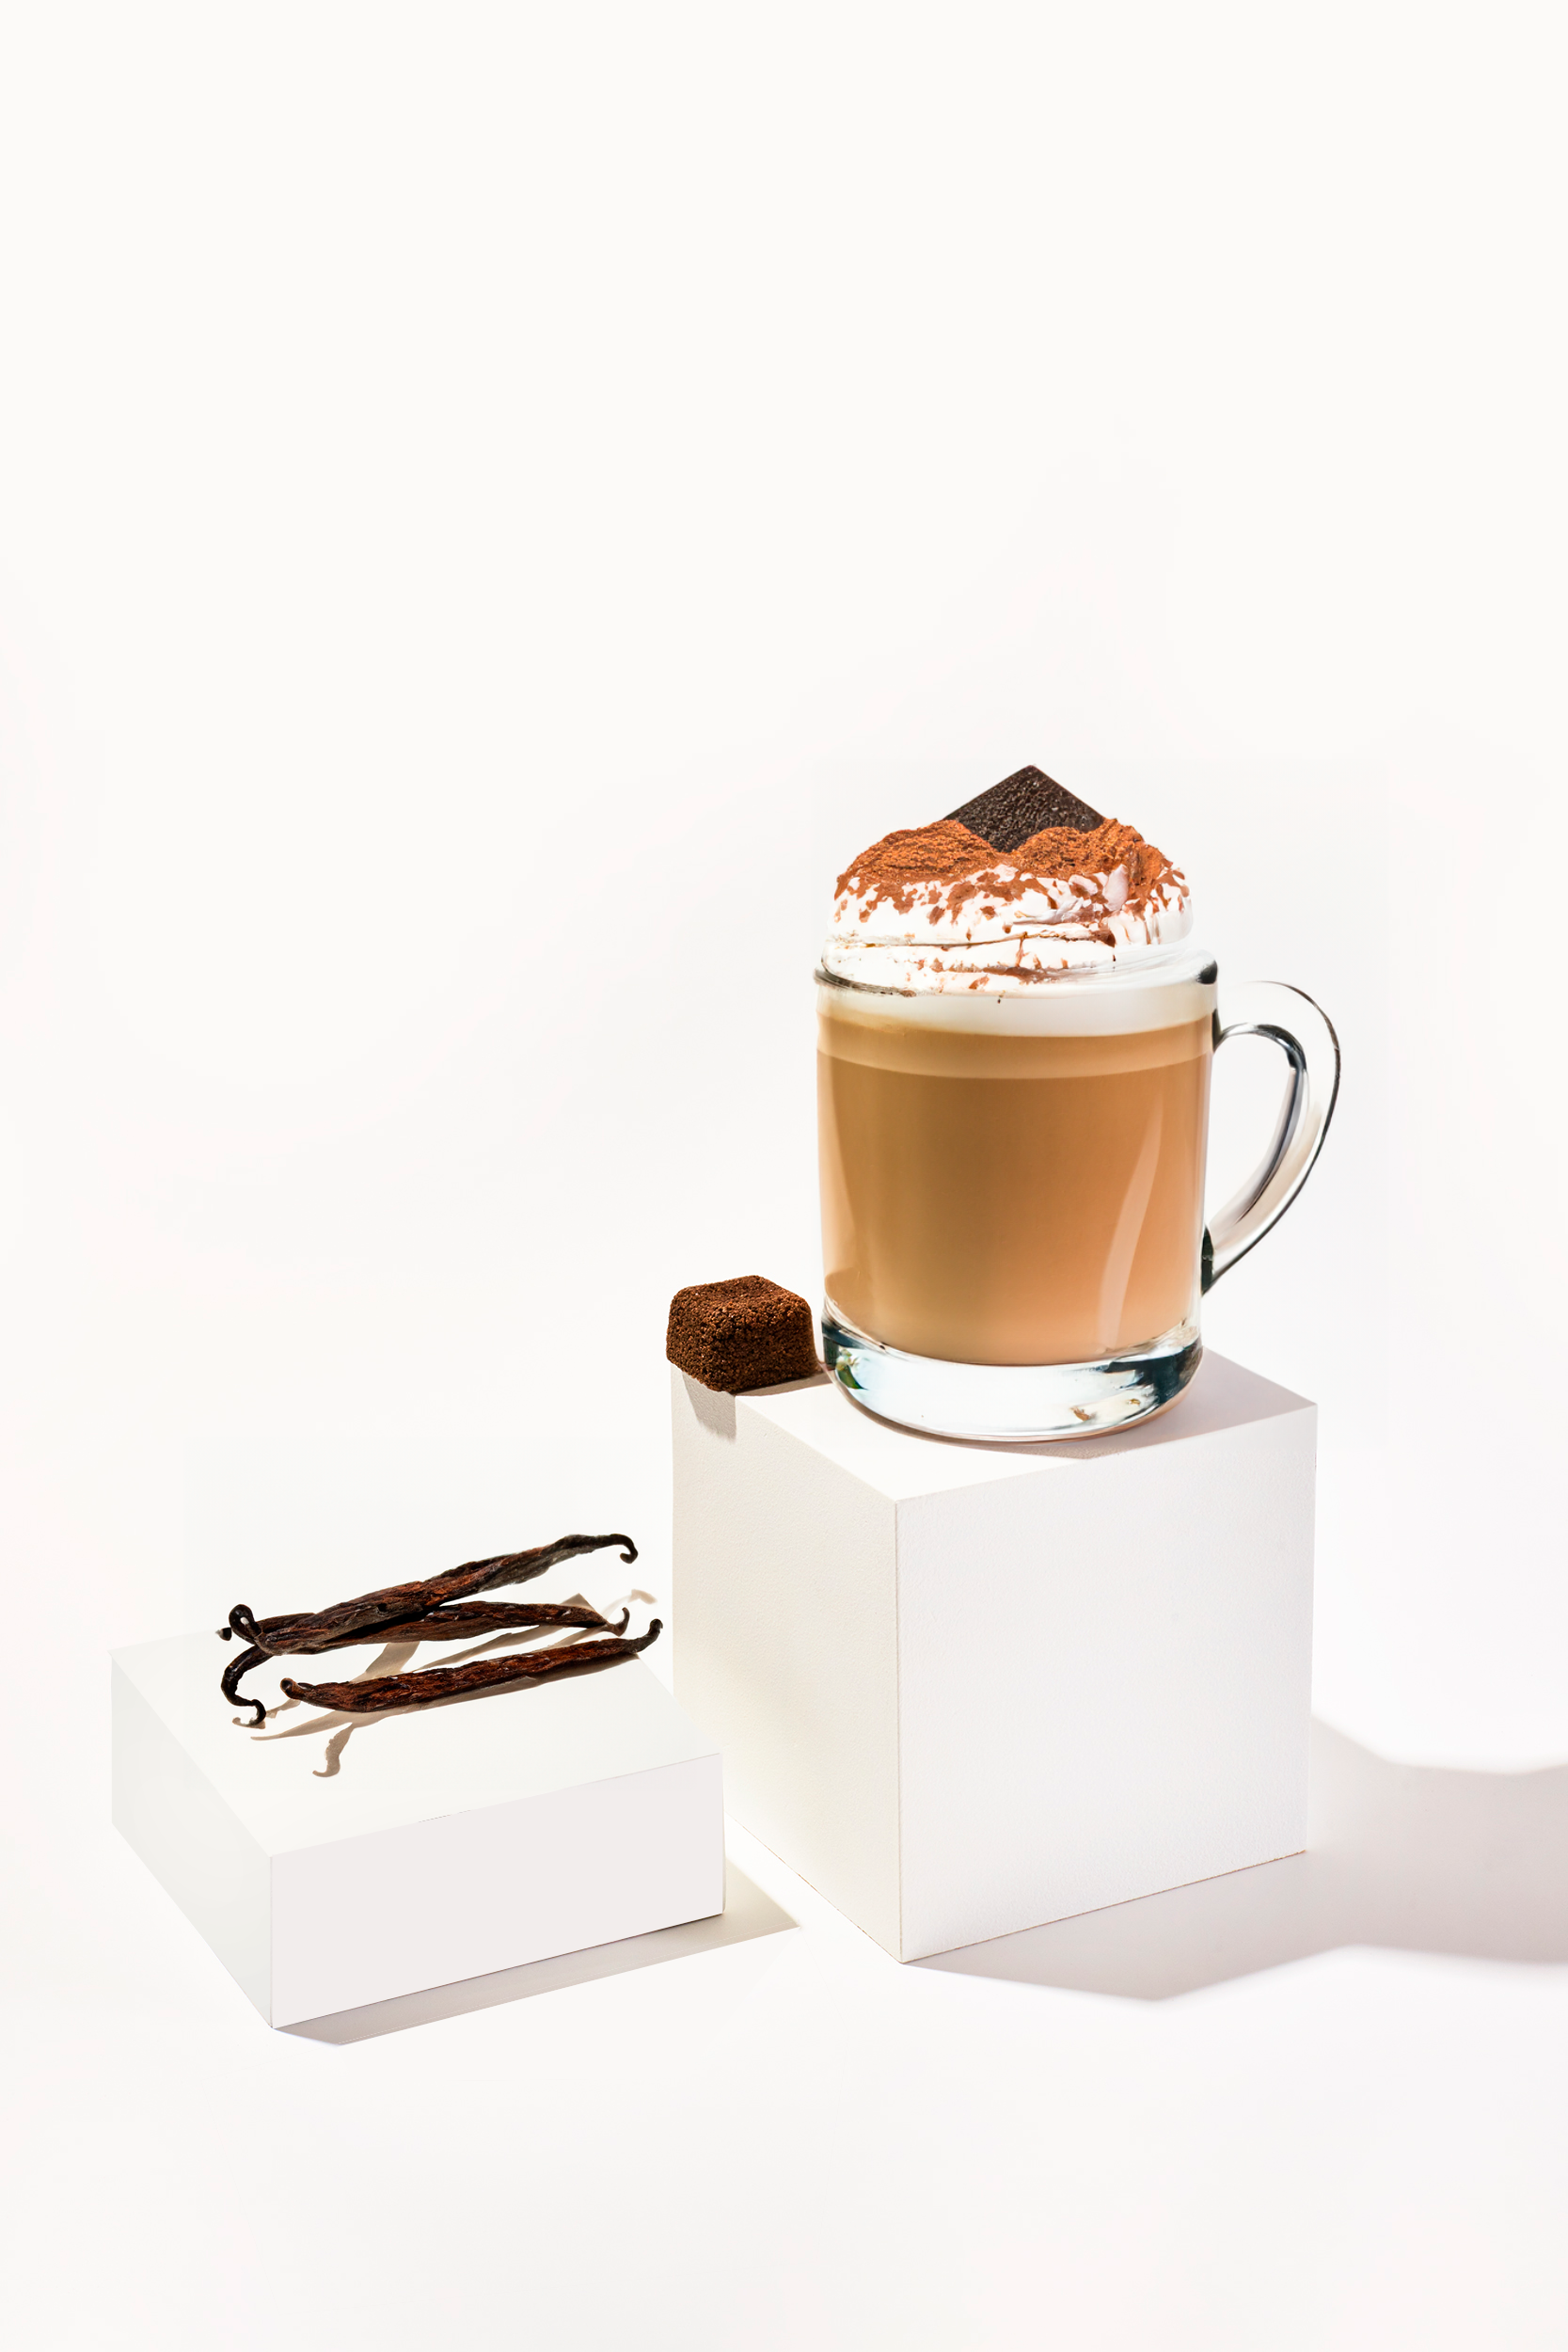 Vanilla Bean Latte Kit – Tea Drops